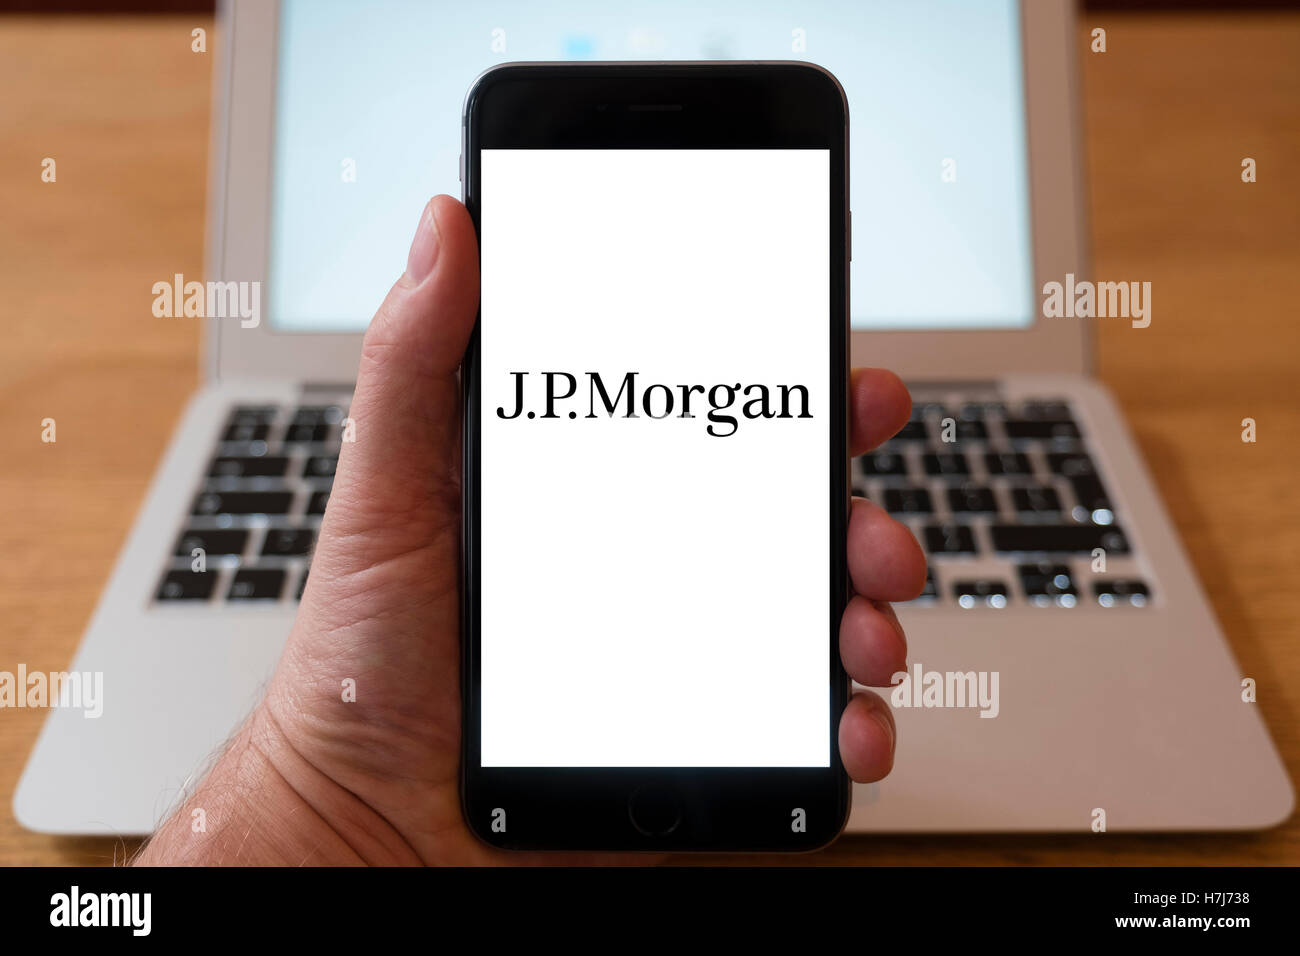 Using iPhone smartphone to display logo of JP Morgan bank Stock Photo